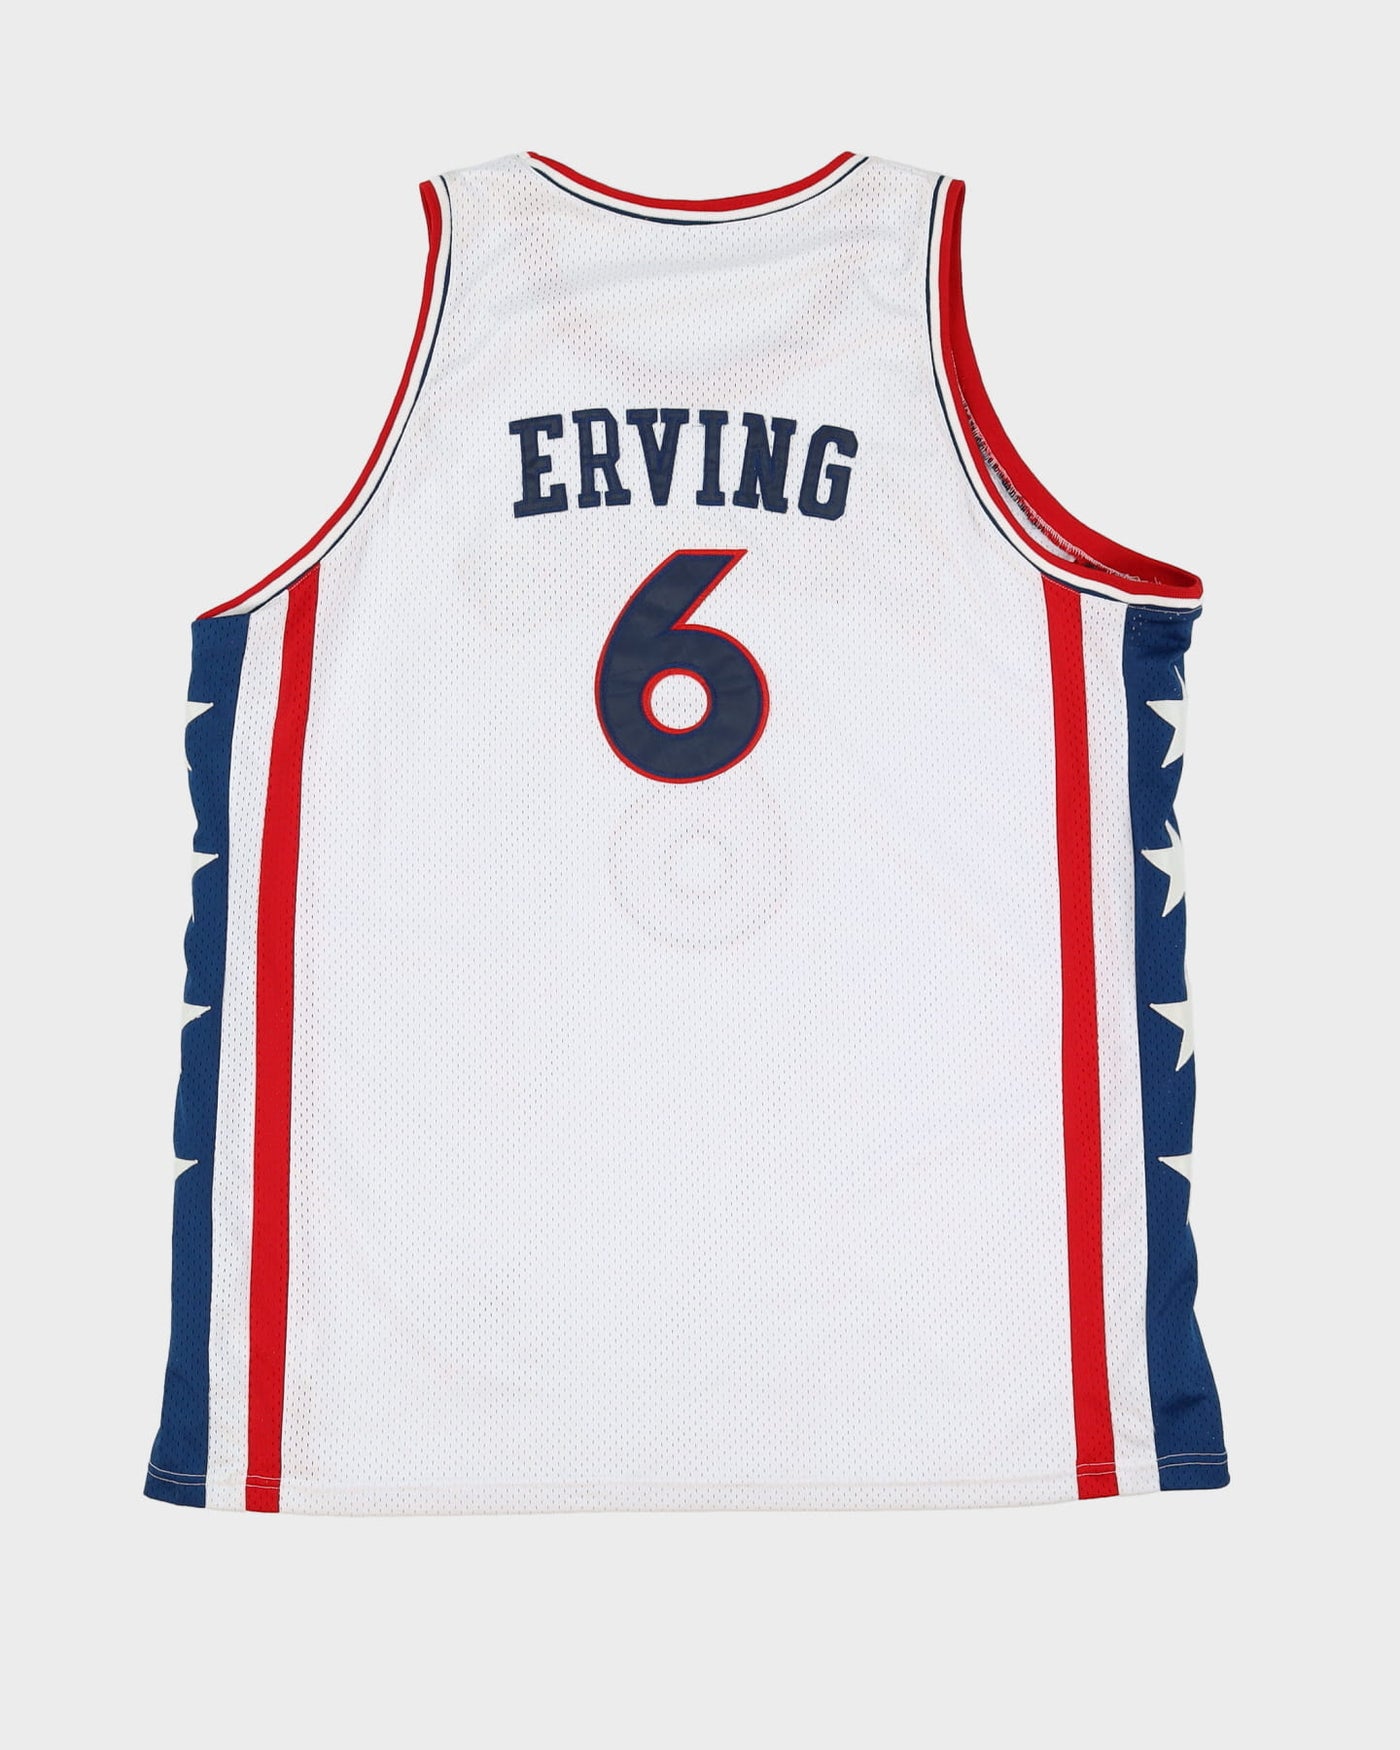 Mitchell & Ness Hardwood Classics 1977-78 Philadelphia 76ers Julius Erving NBA Jersey - XXL